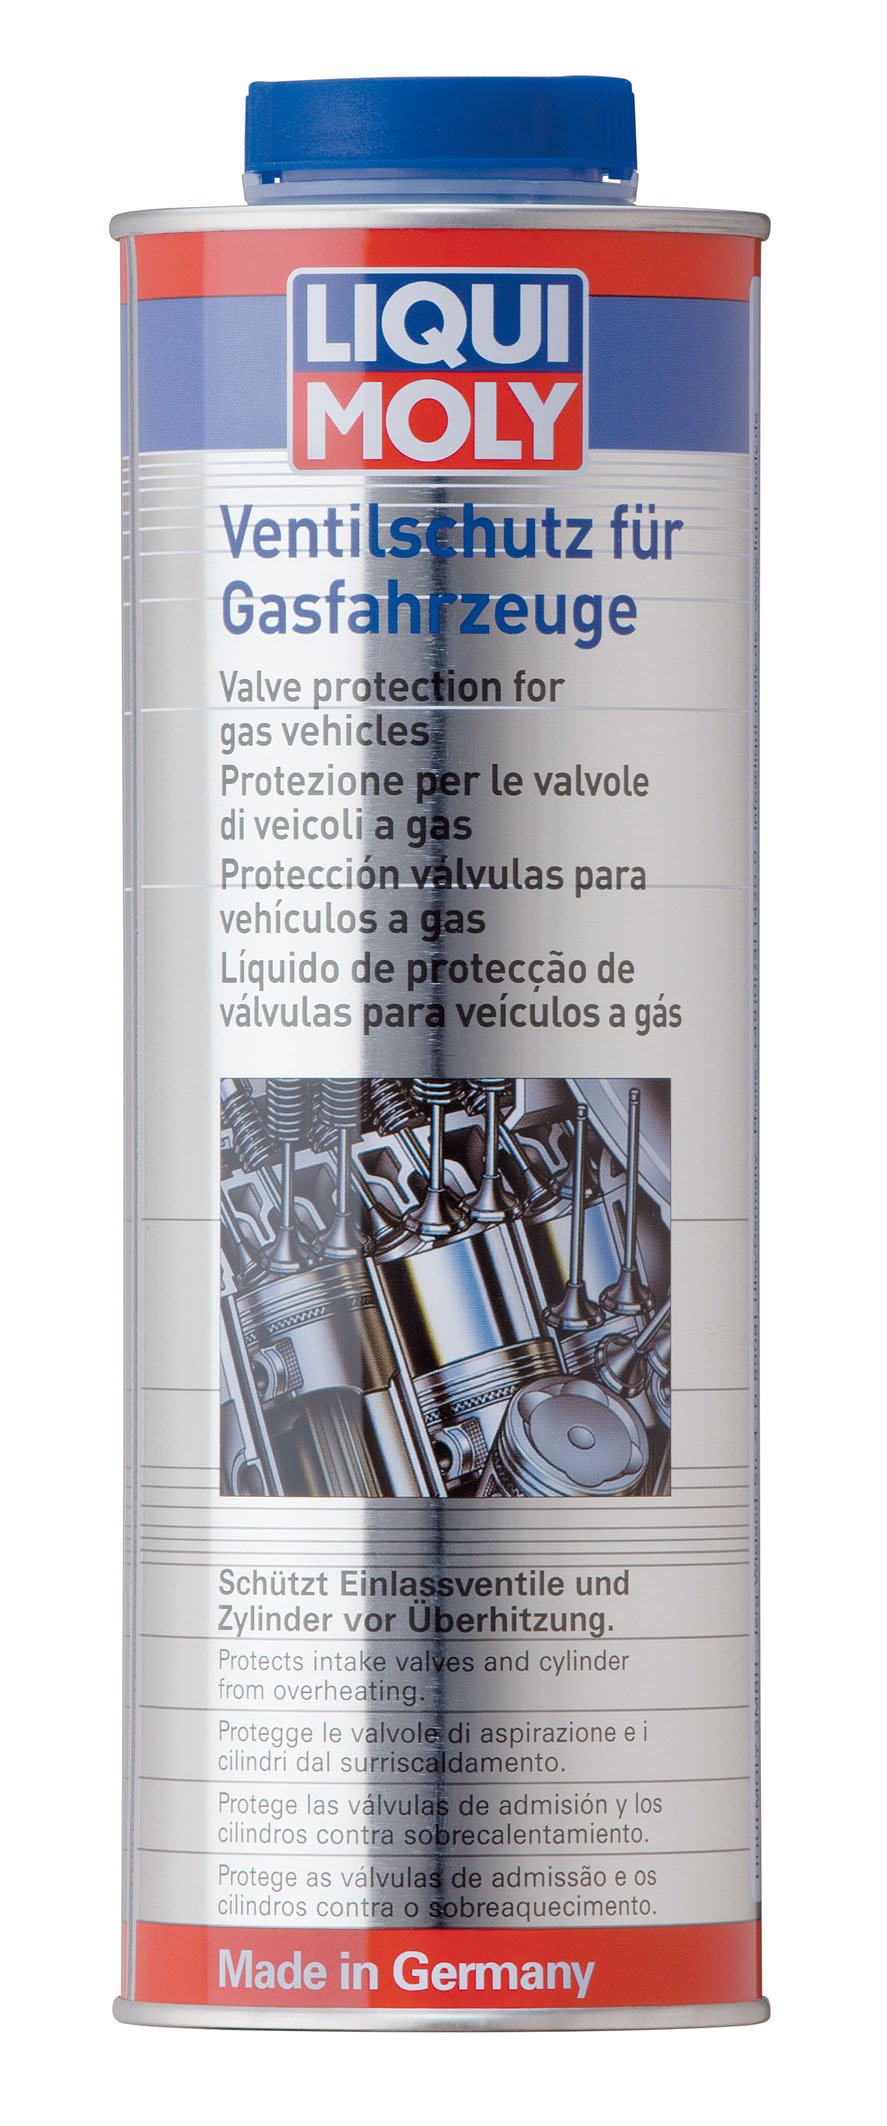 LIQUI MOLY Ventilschutz für Gasfahrzeuge | 1 L | Benzinadditiv | Art.-Nr.: 4012 von Liqui Moly